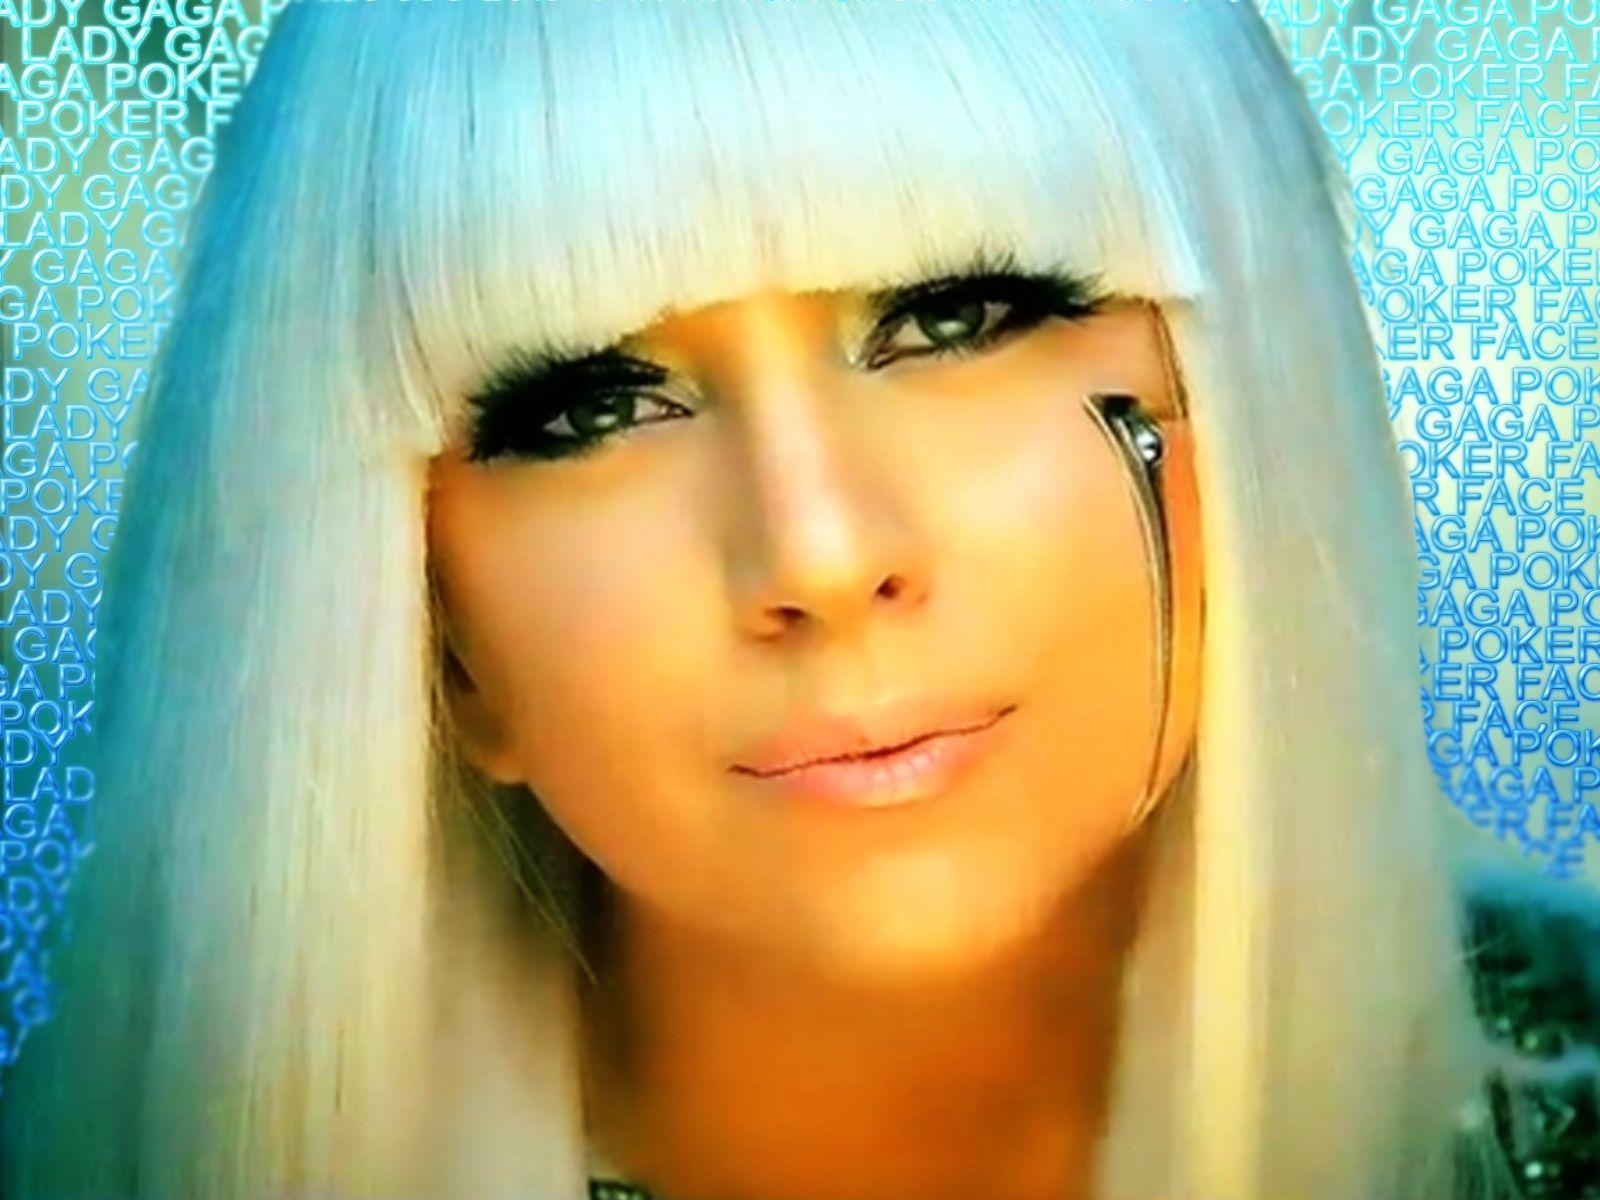 Lady Gaga Poker Face Wallpaper